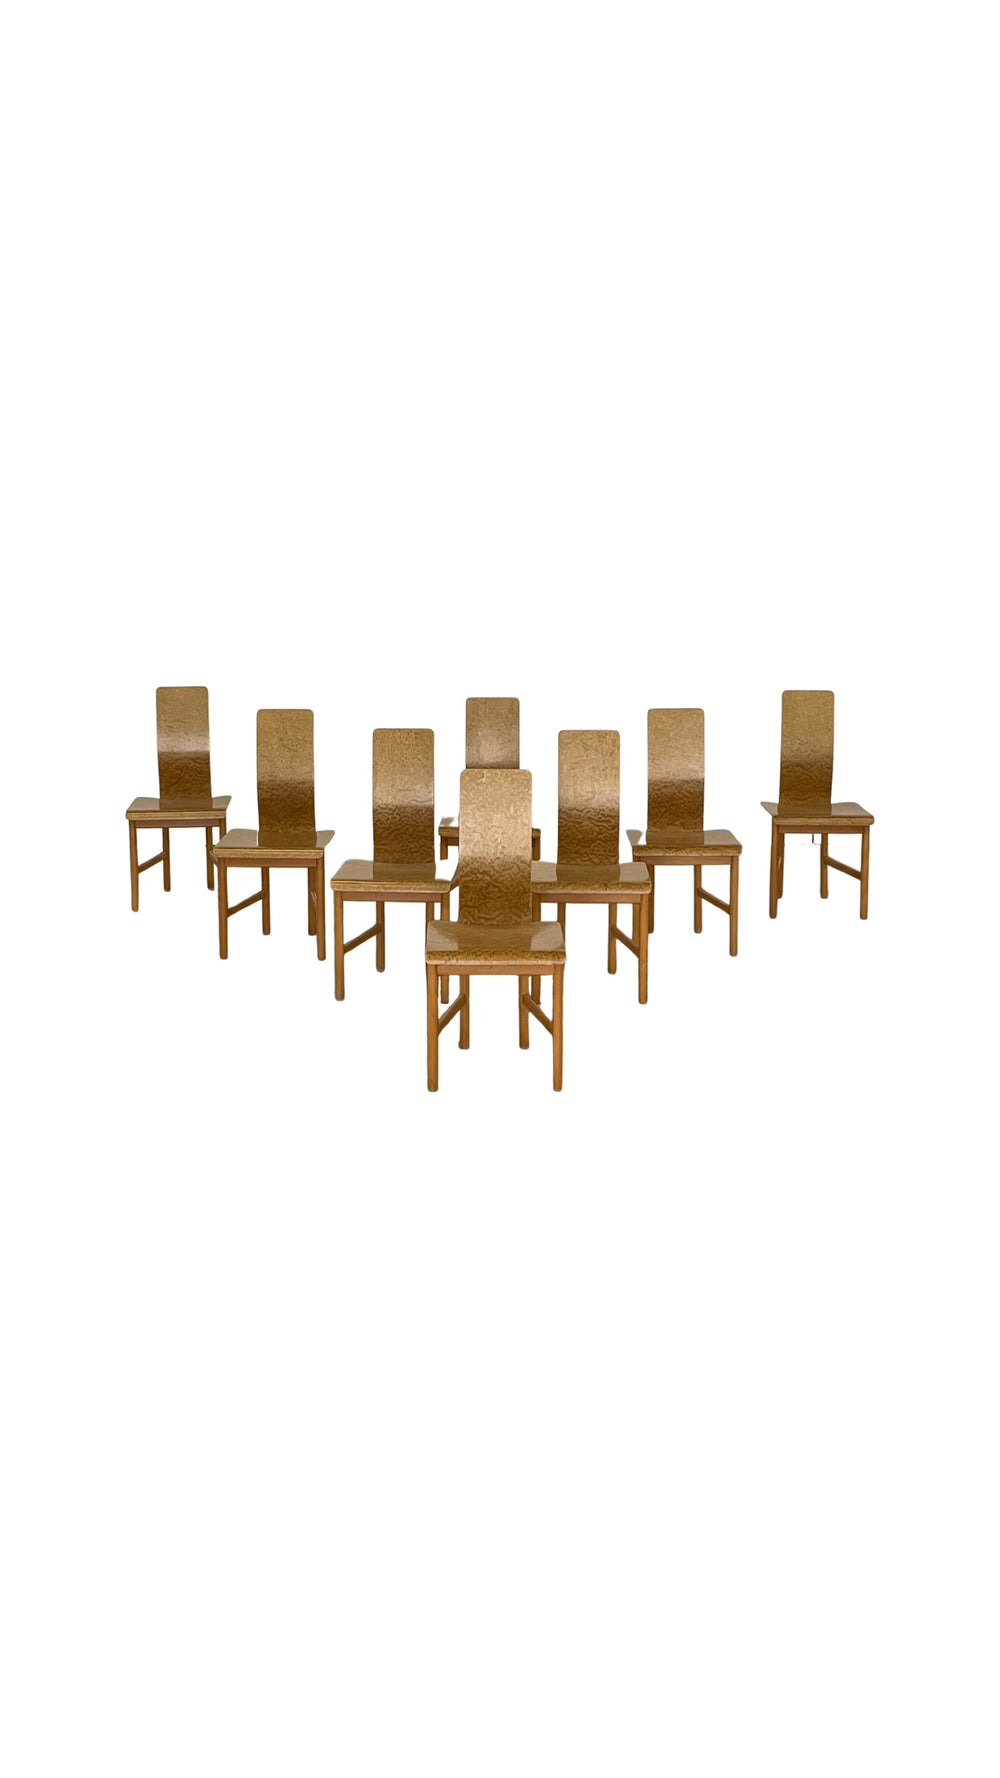 Enzo Mari rare set of eight “Vela” burlwood dining chairs for Driade, Italy circa 1977